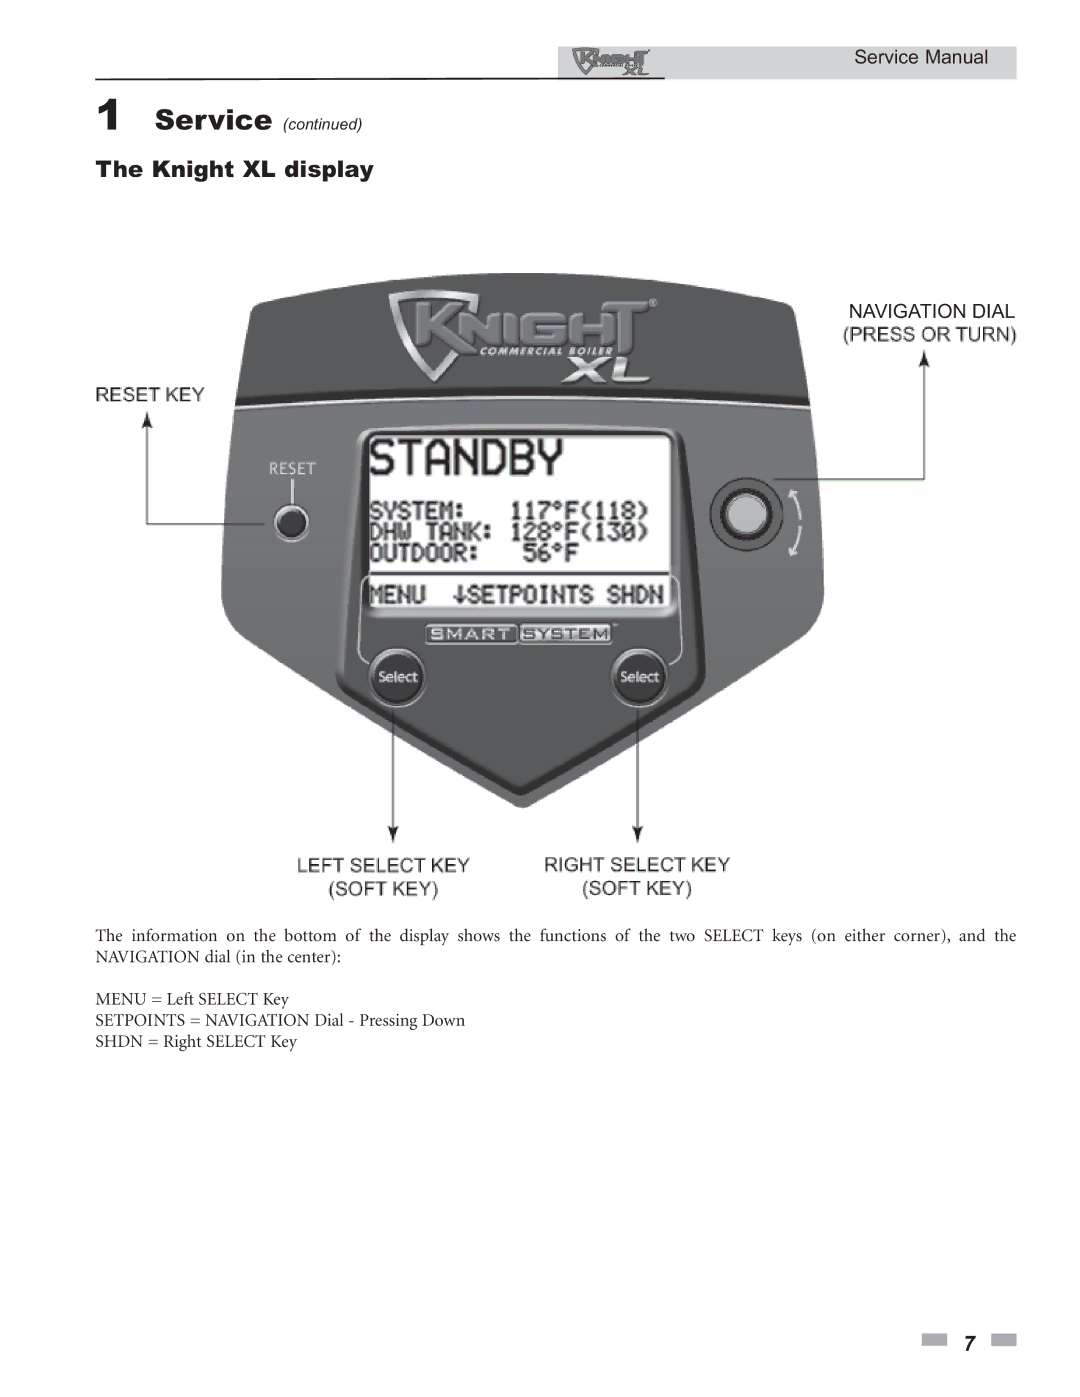 Lochinvar 400 - 801 service manual Knight XL display, Navigation Dial 